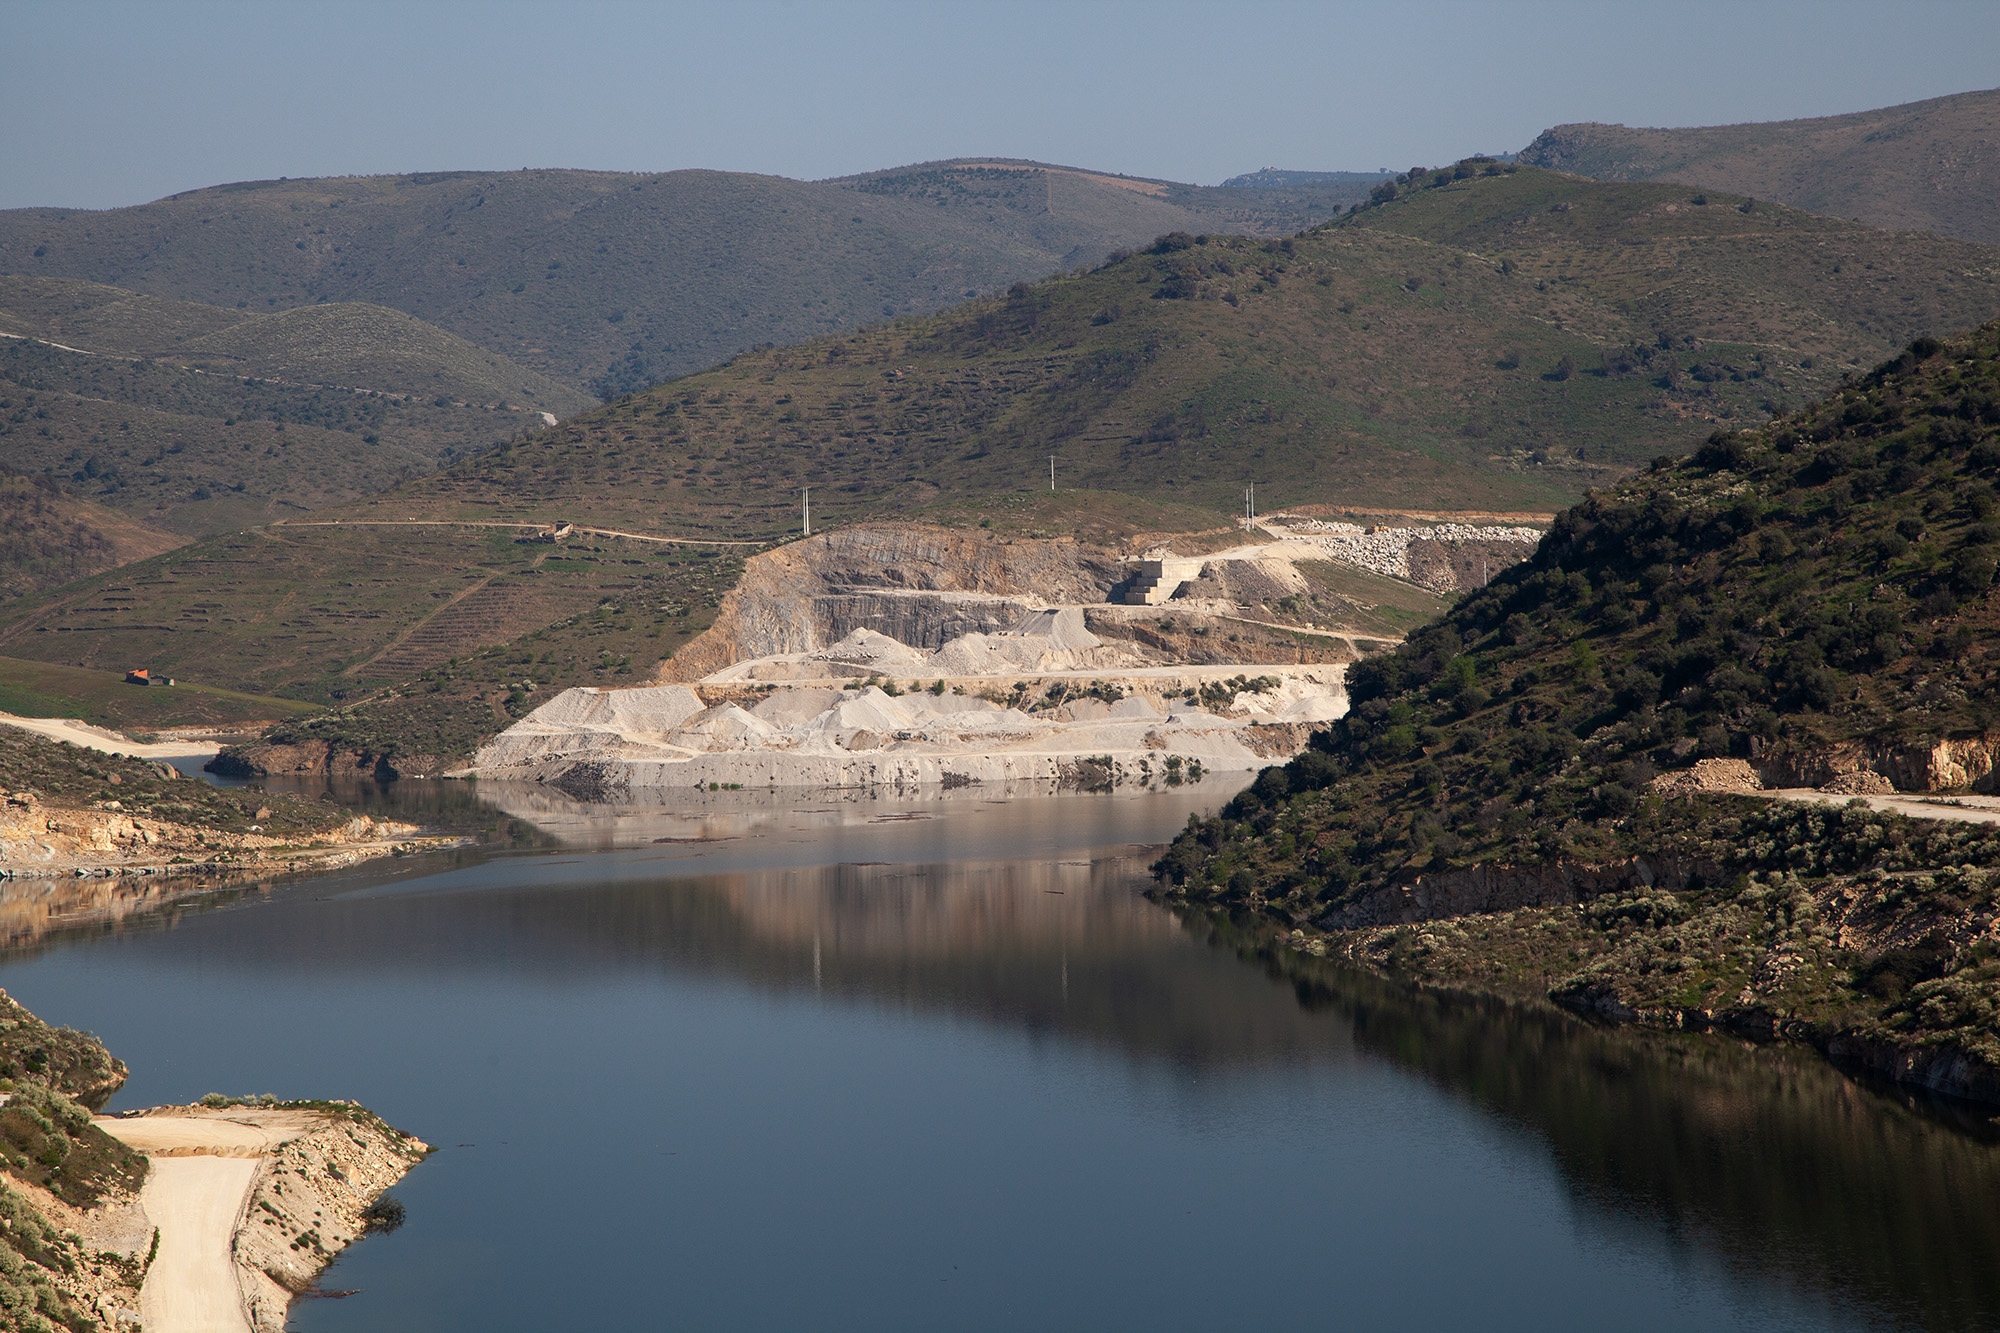 Carina Martins - Vortex - Mountain destruction during dam construction